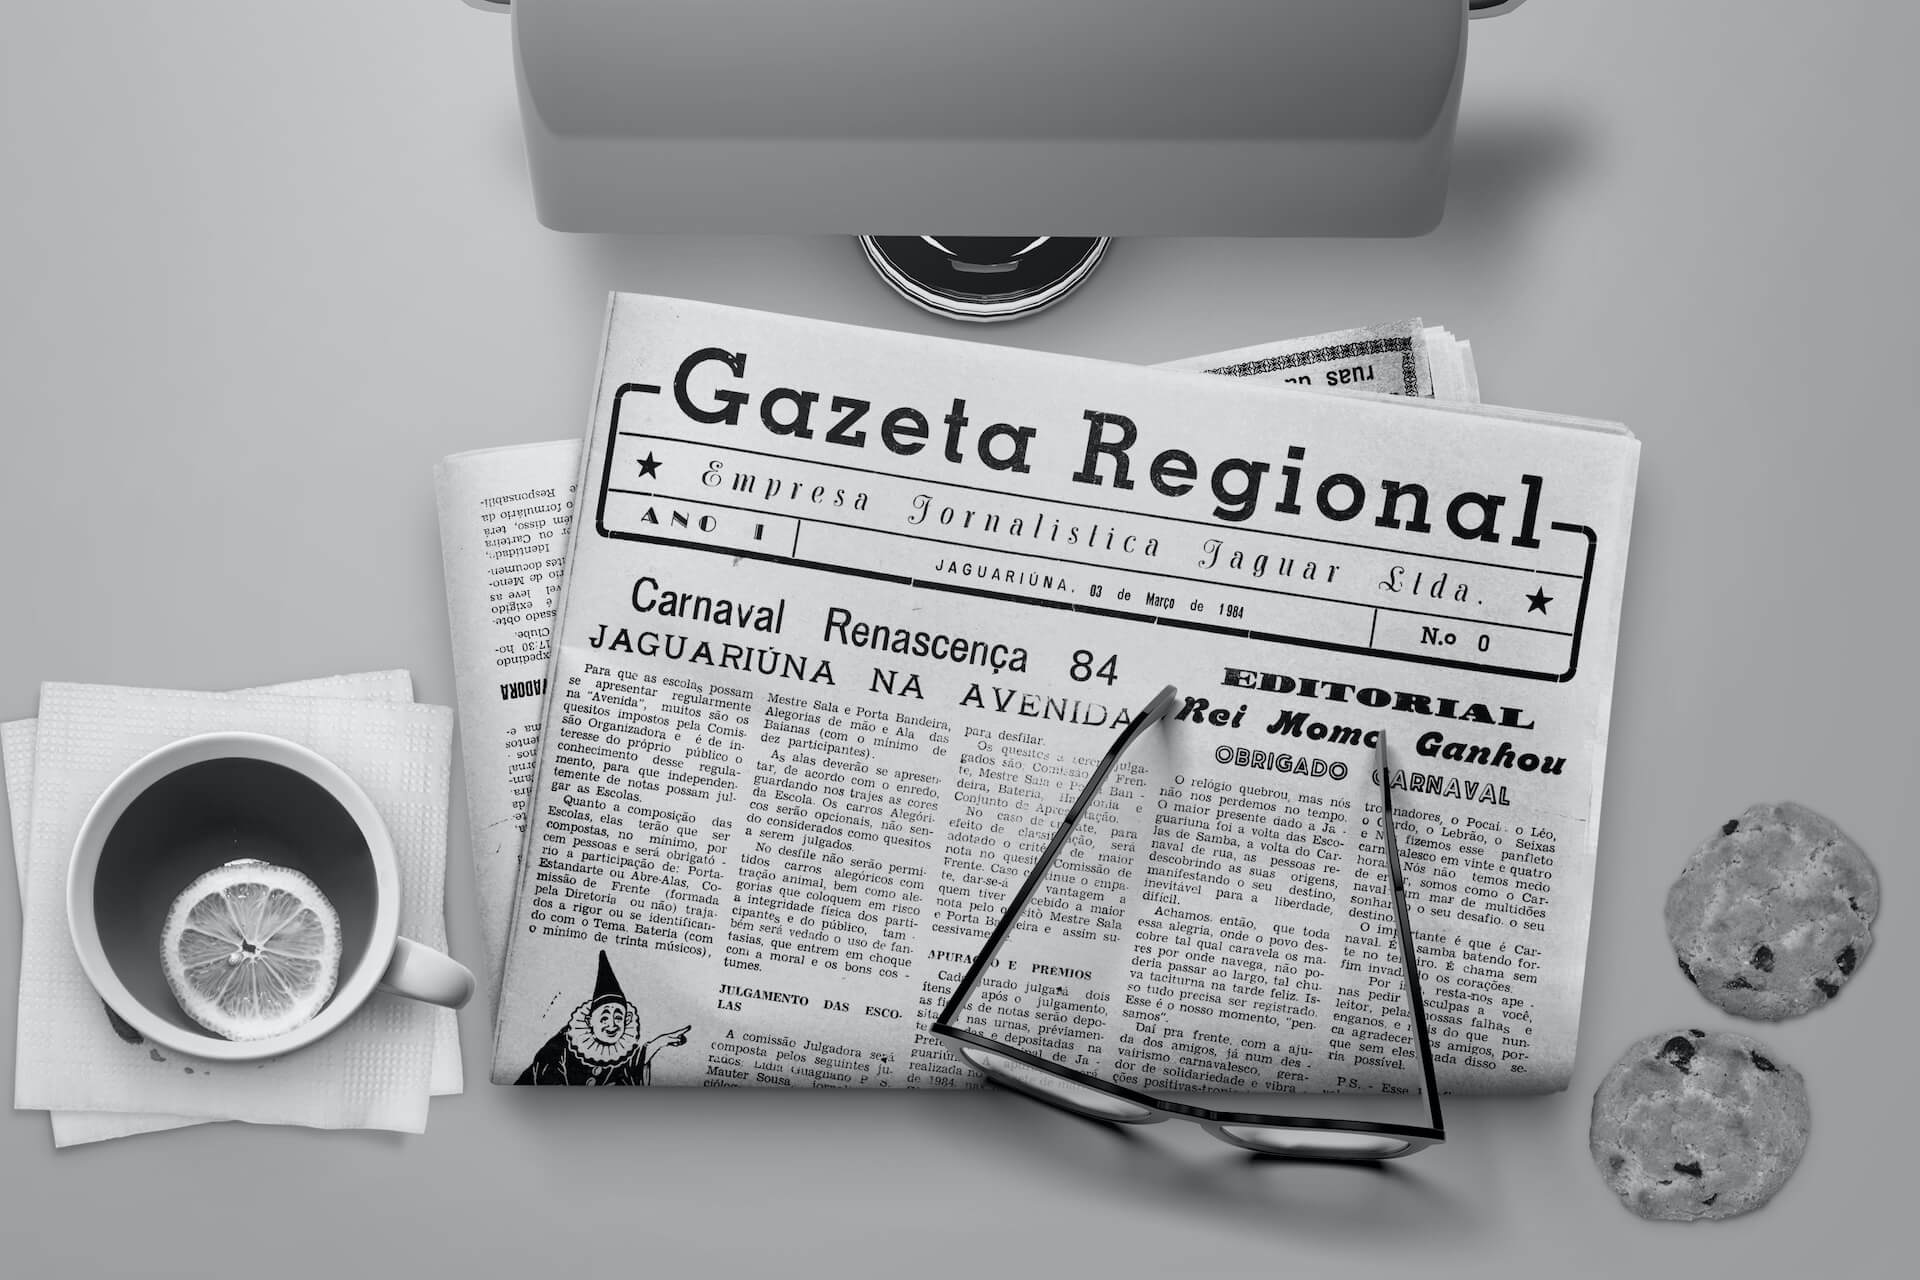 Gazeta Regional